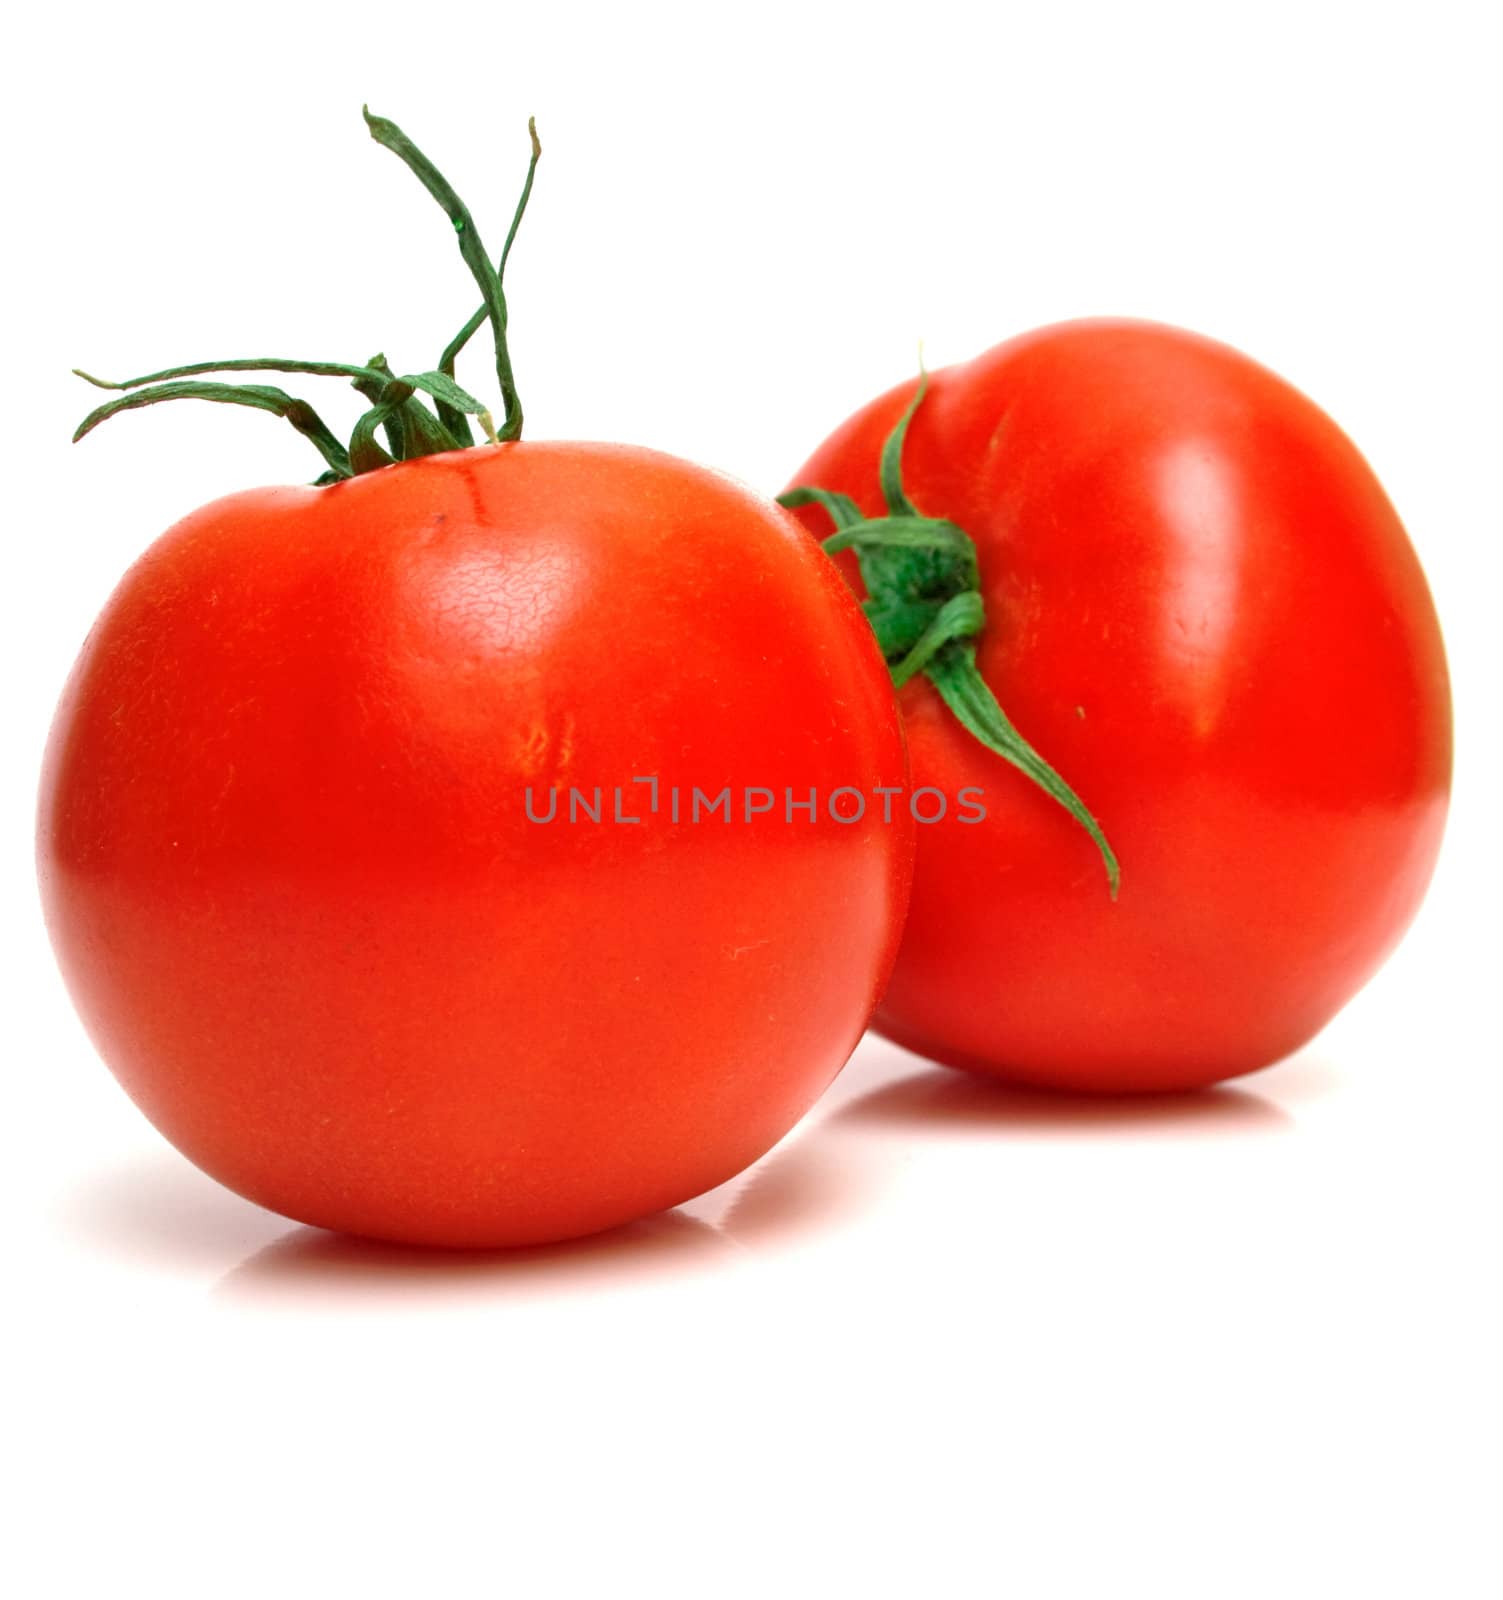 Two juicy fresh tomatoes on white. Isolation.